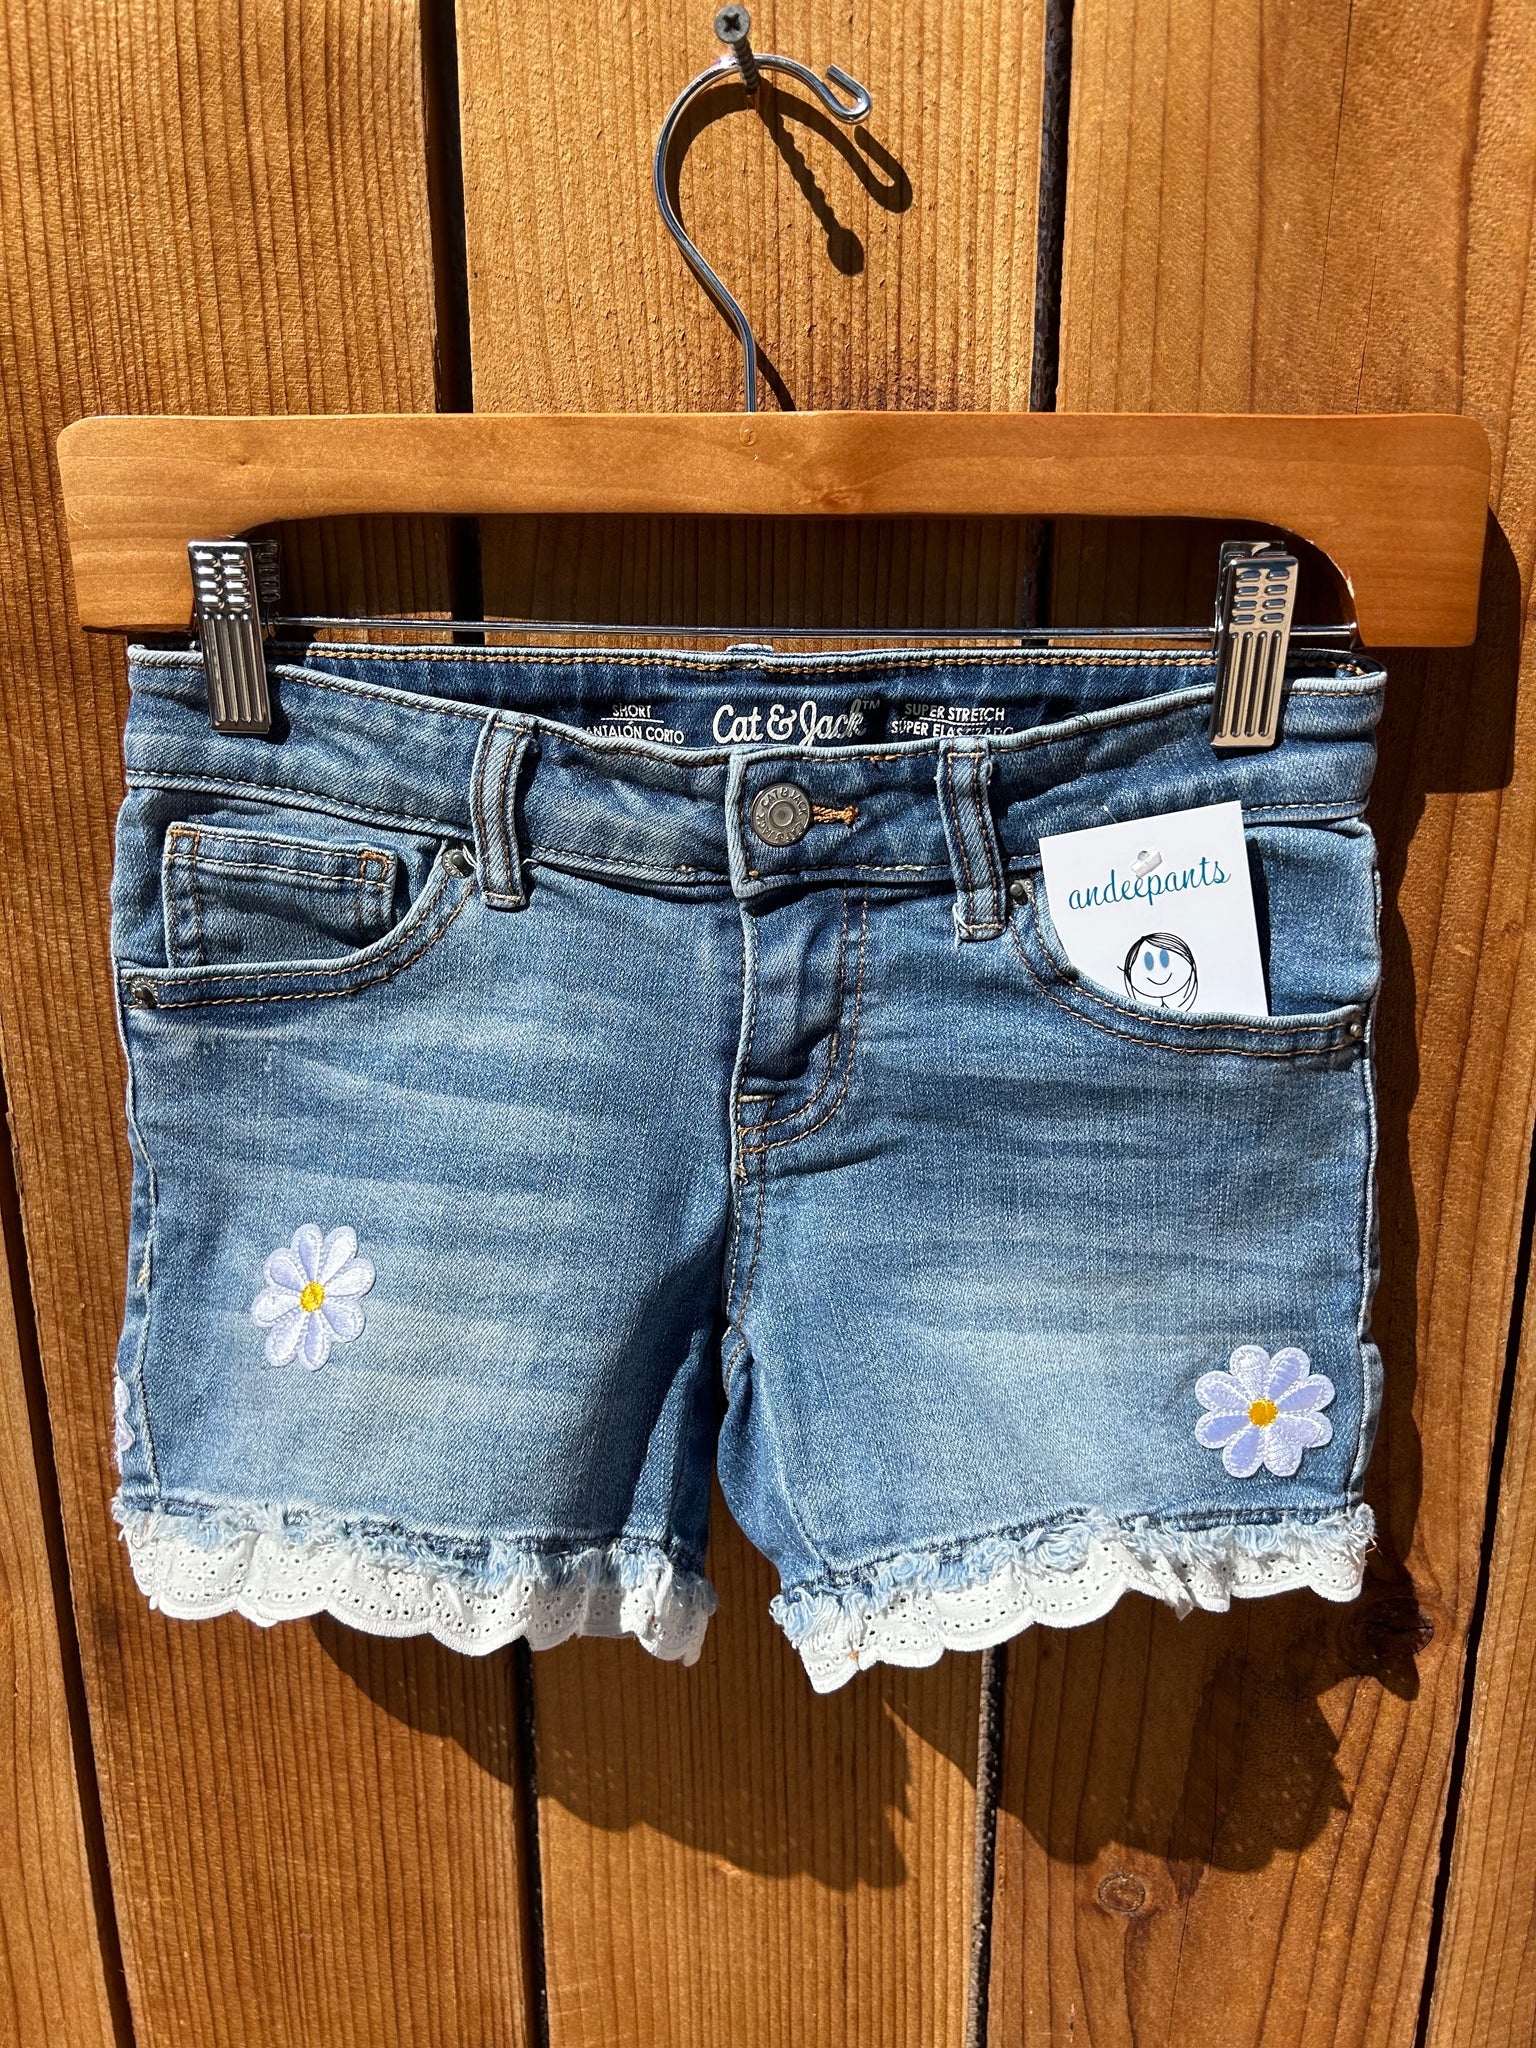 Girls Shorts Blue and white daisy Size 7/8